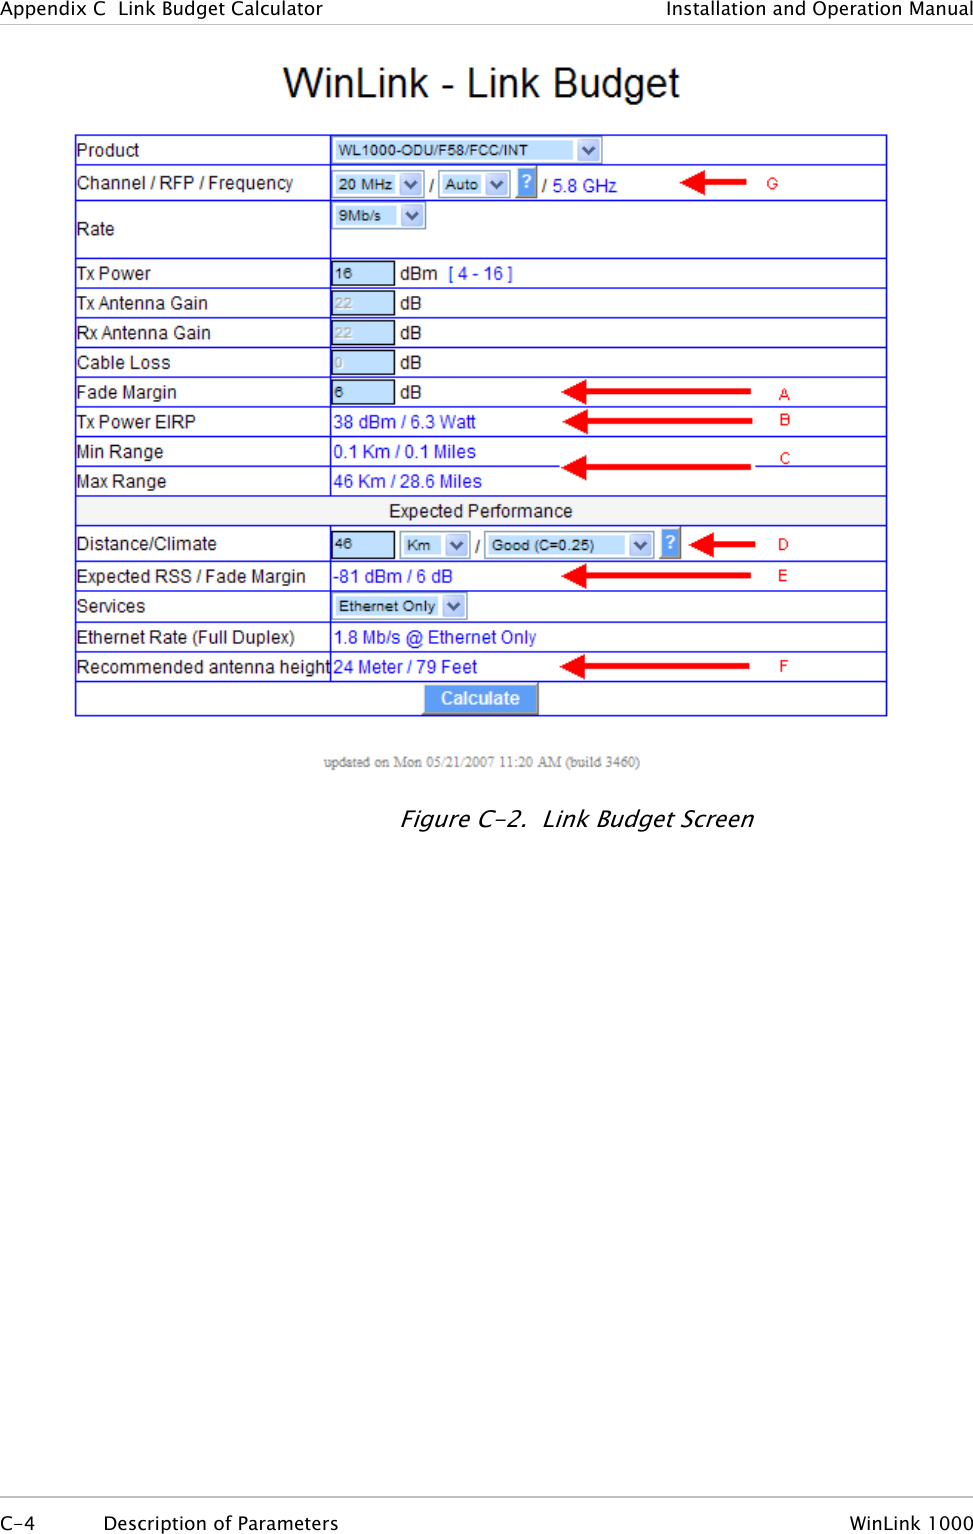 Appendix  C  Link Budget Calculator  Installation and Operation Manual  Figure  C-2.  Link Budget Screen C-4 Description of Parameters  WinLink 1000  